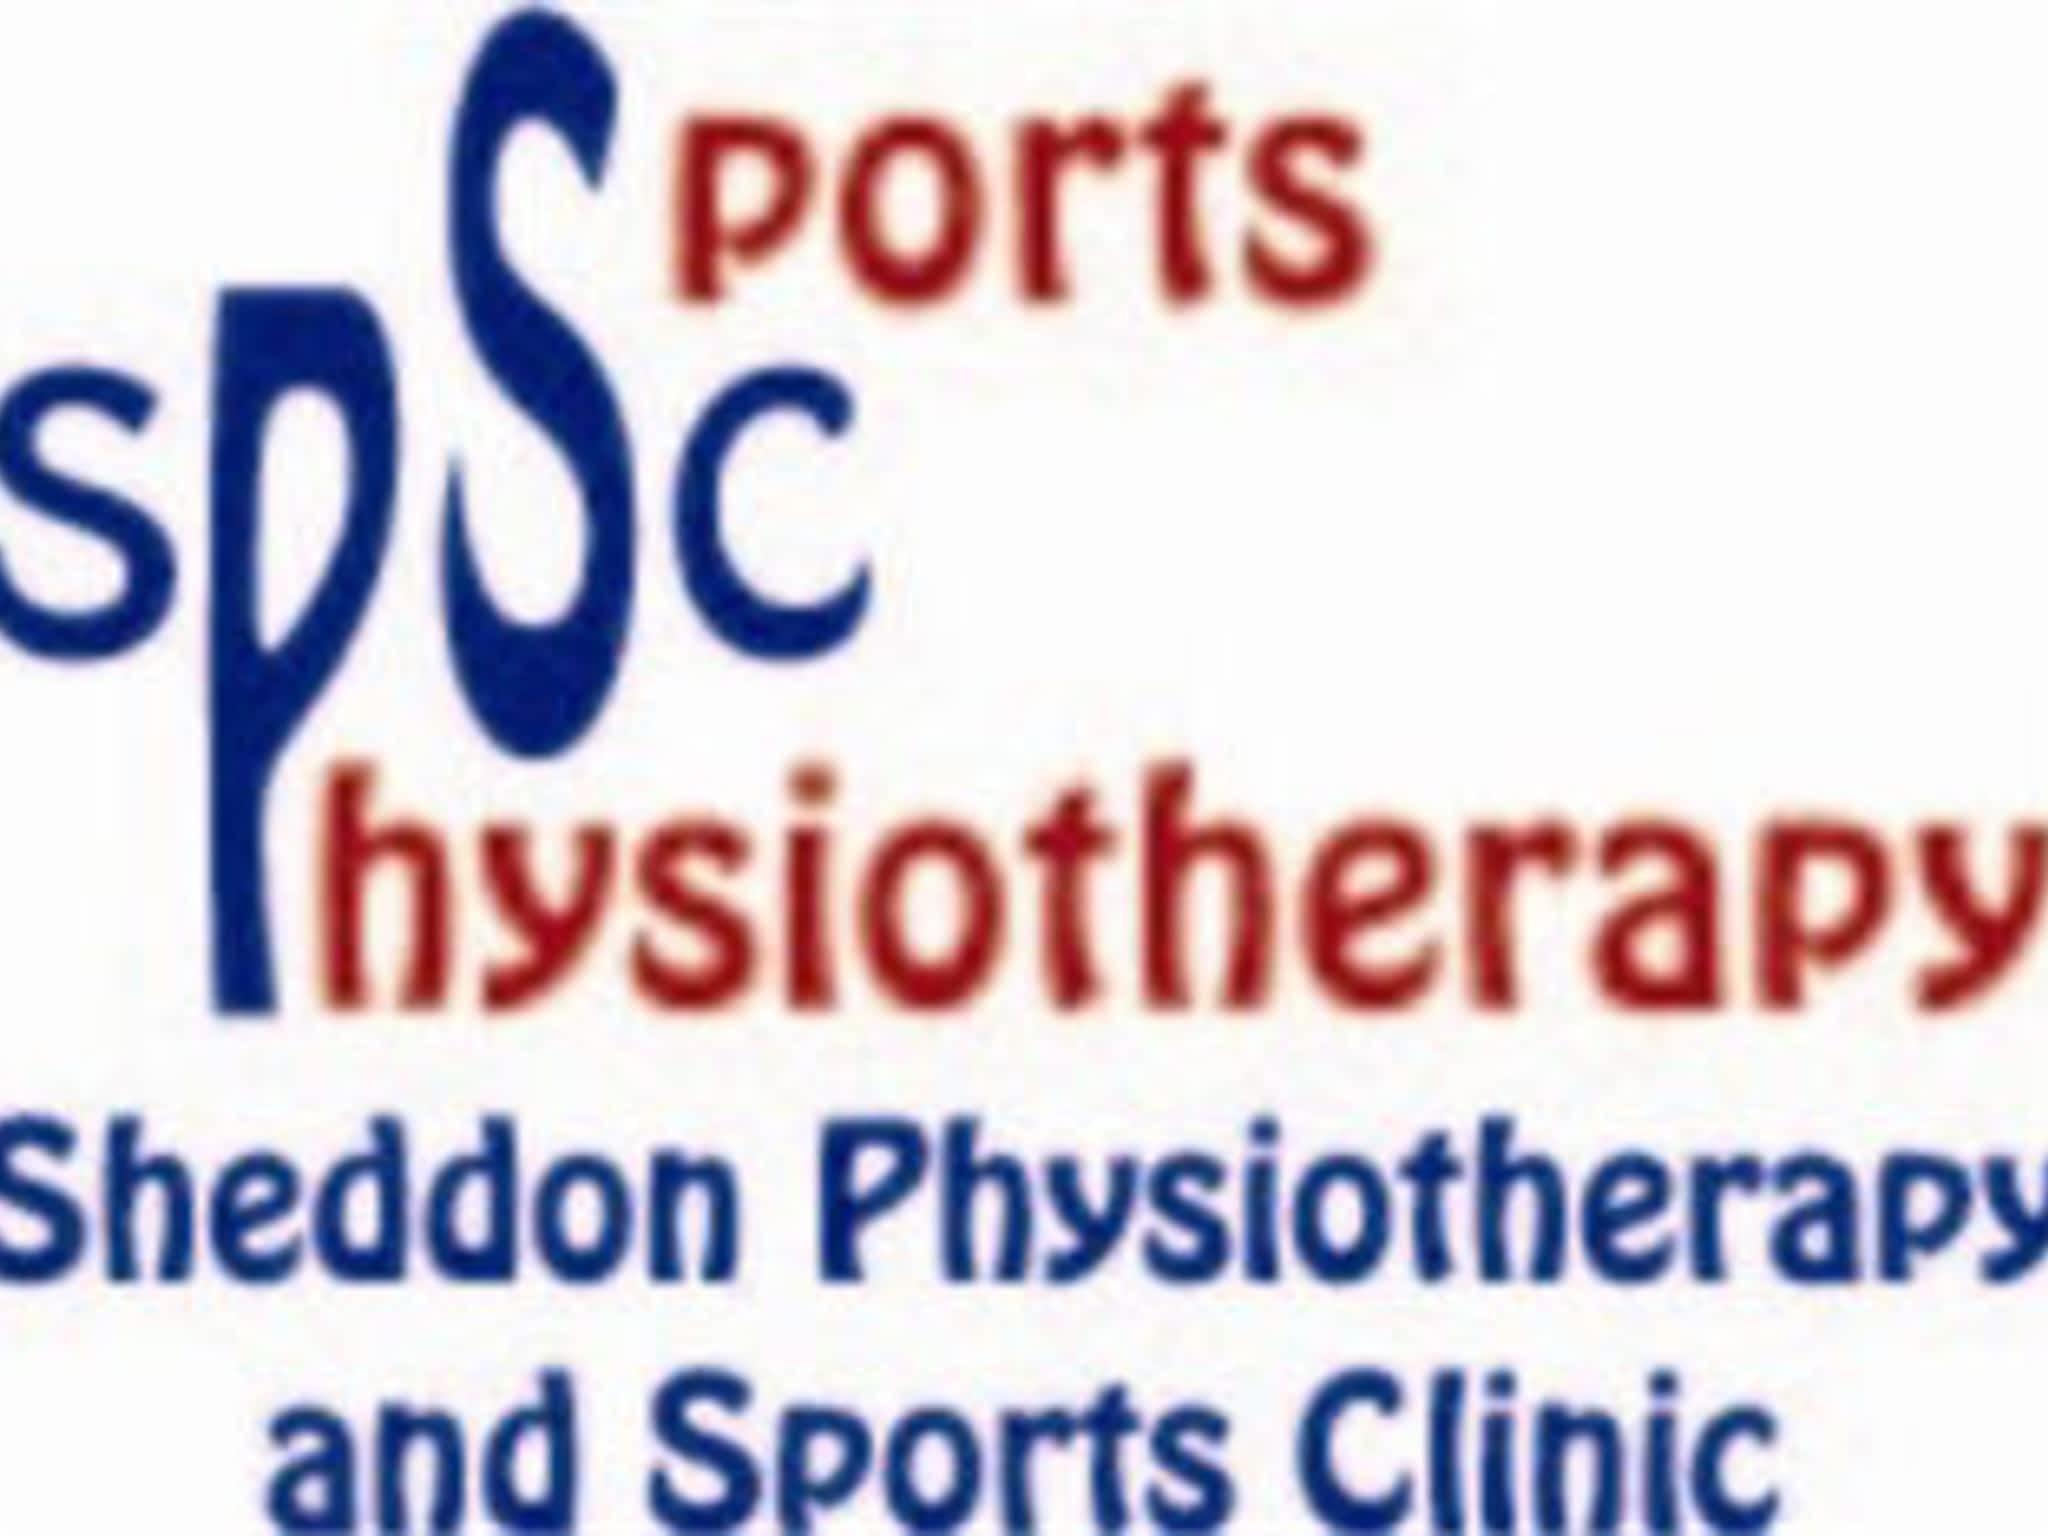 photo Sheddon Physiotherapy & Sports Clinic